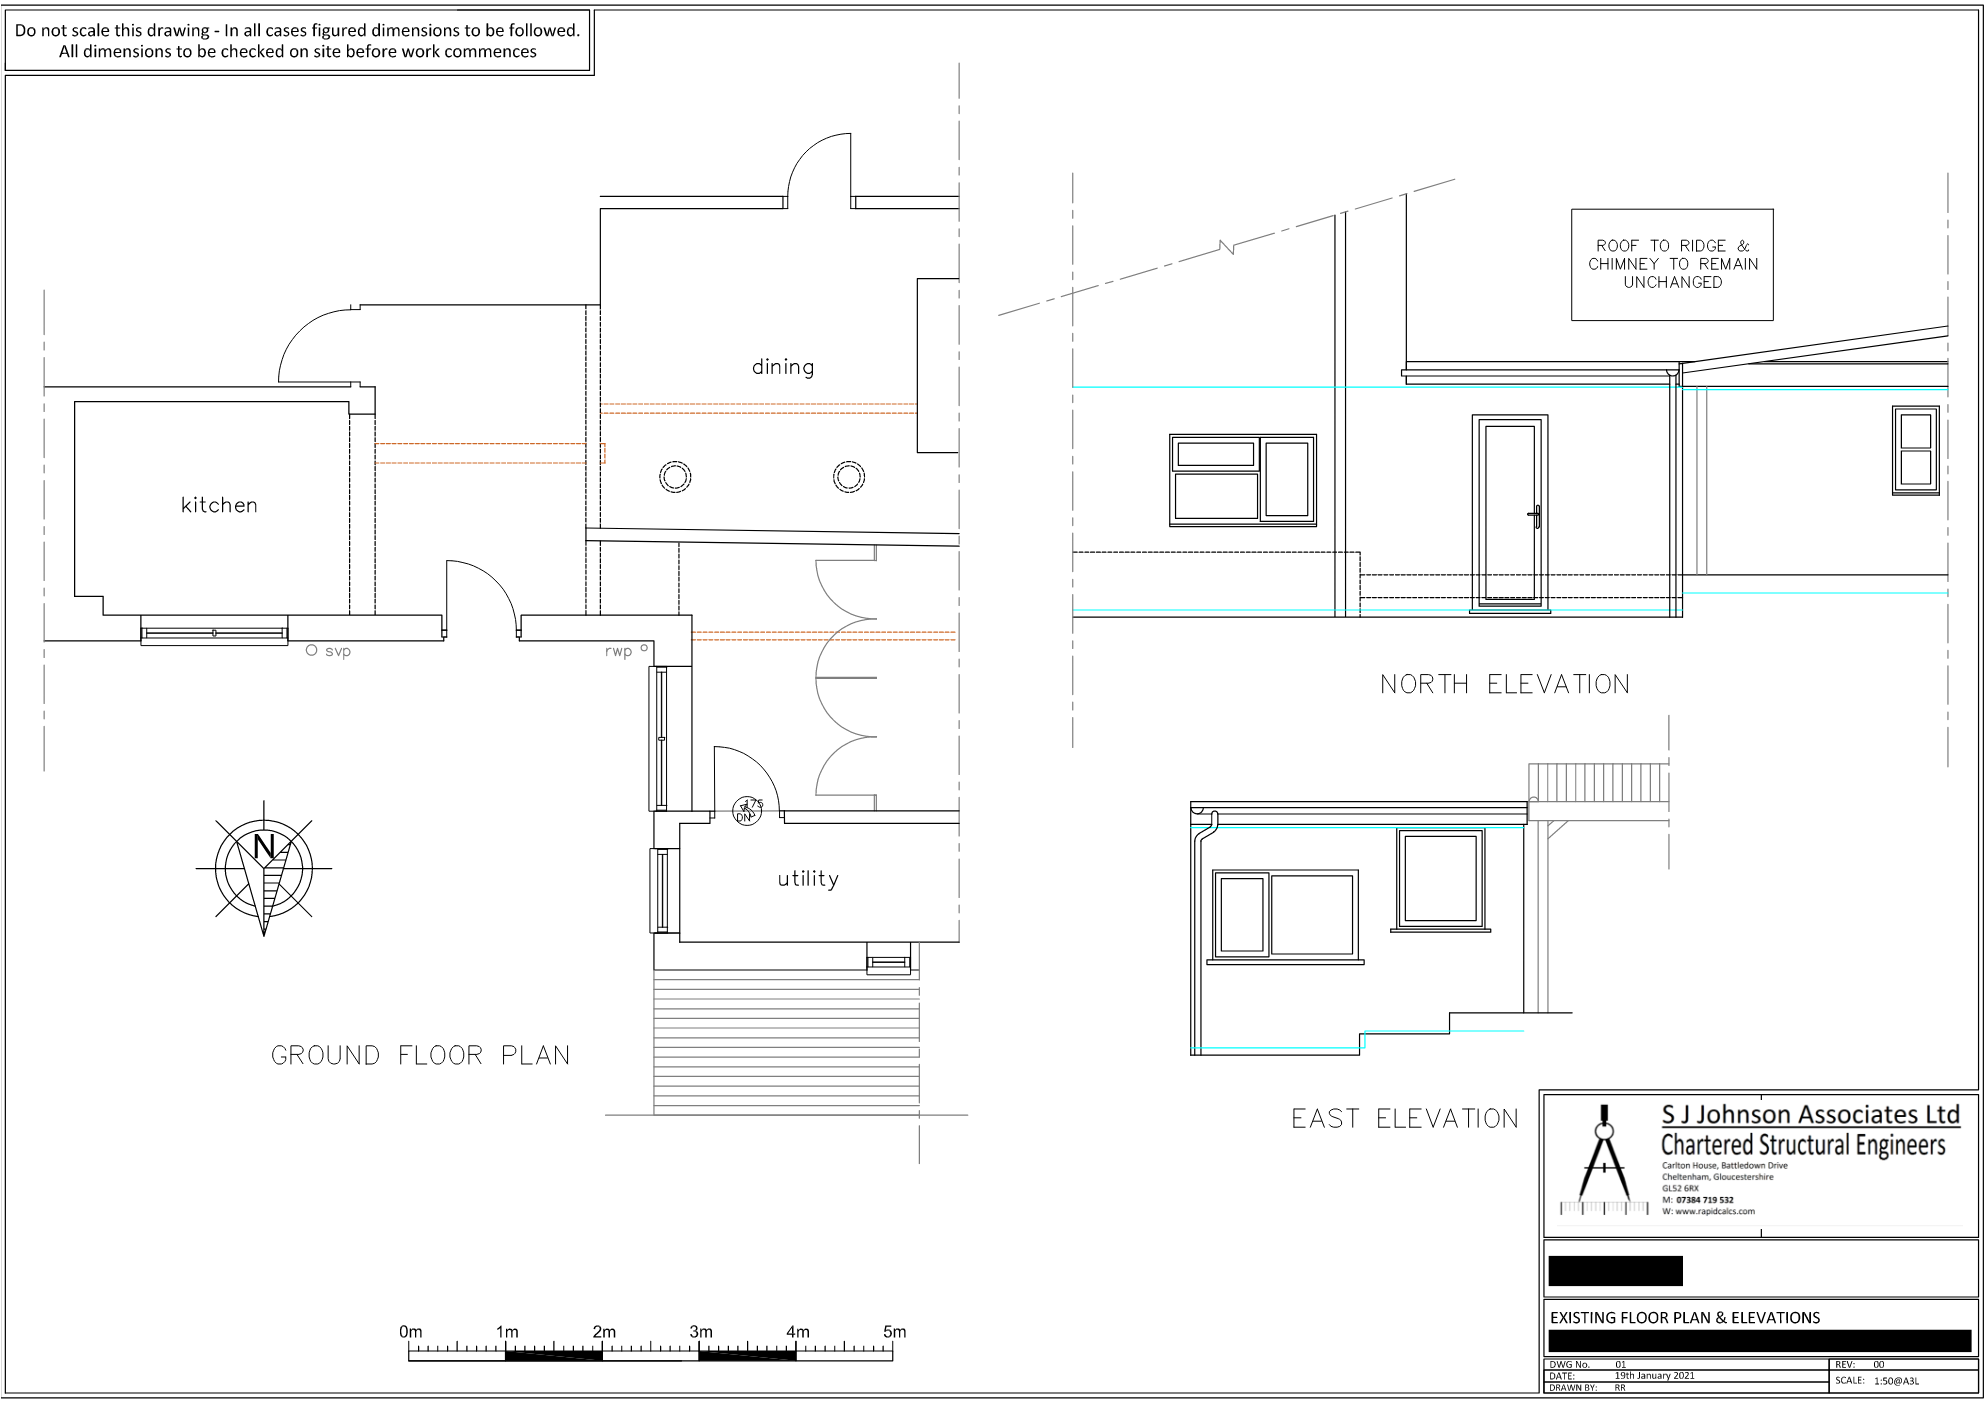 Cudnall - Existing floor plan & elevations (1)